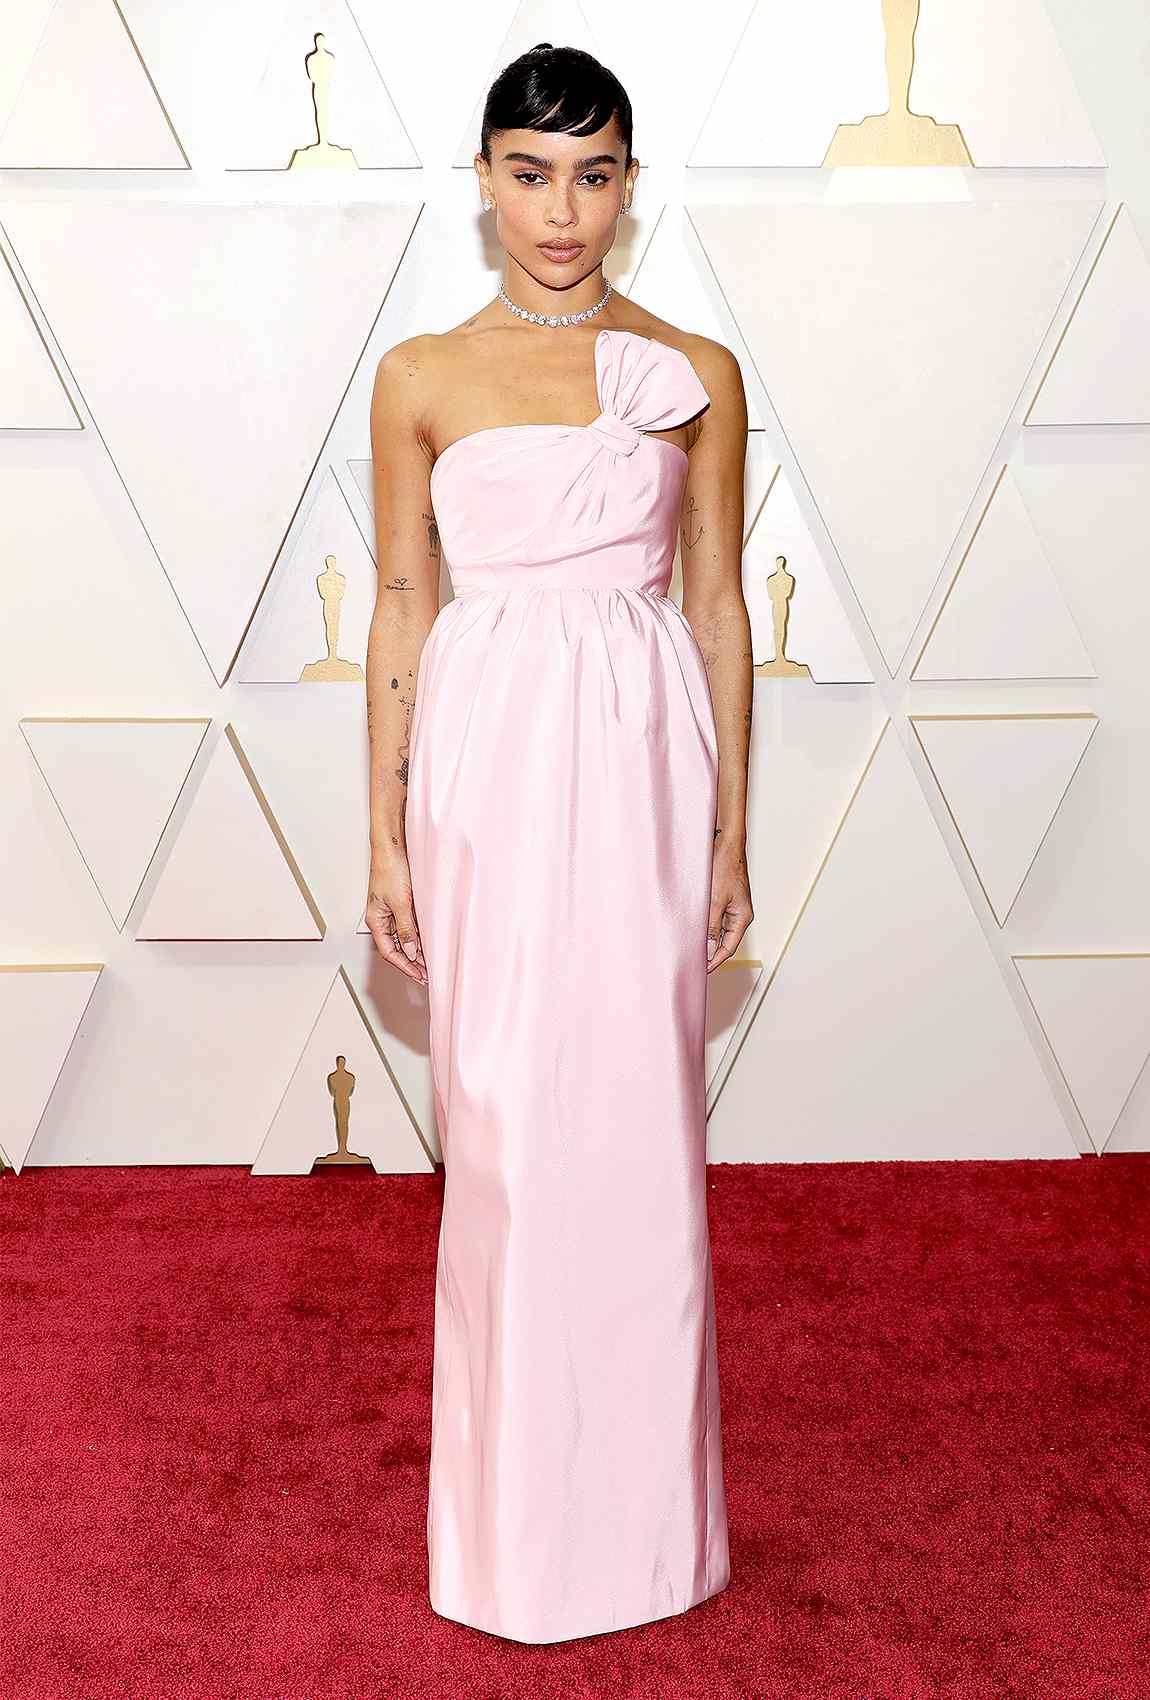 Zoe Kravitz Wears Pink Saint Laurent Dress to 2022 Oscars | PEOPLE.com